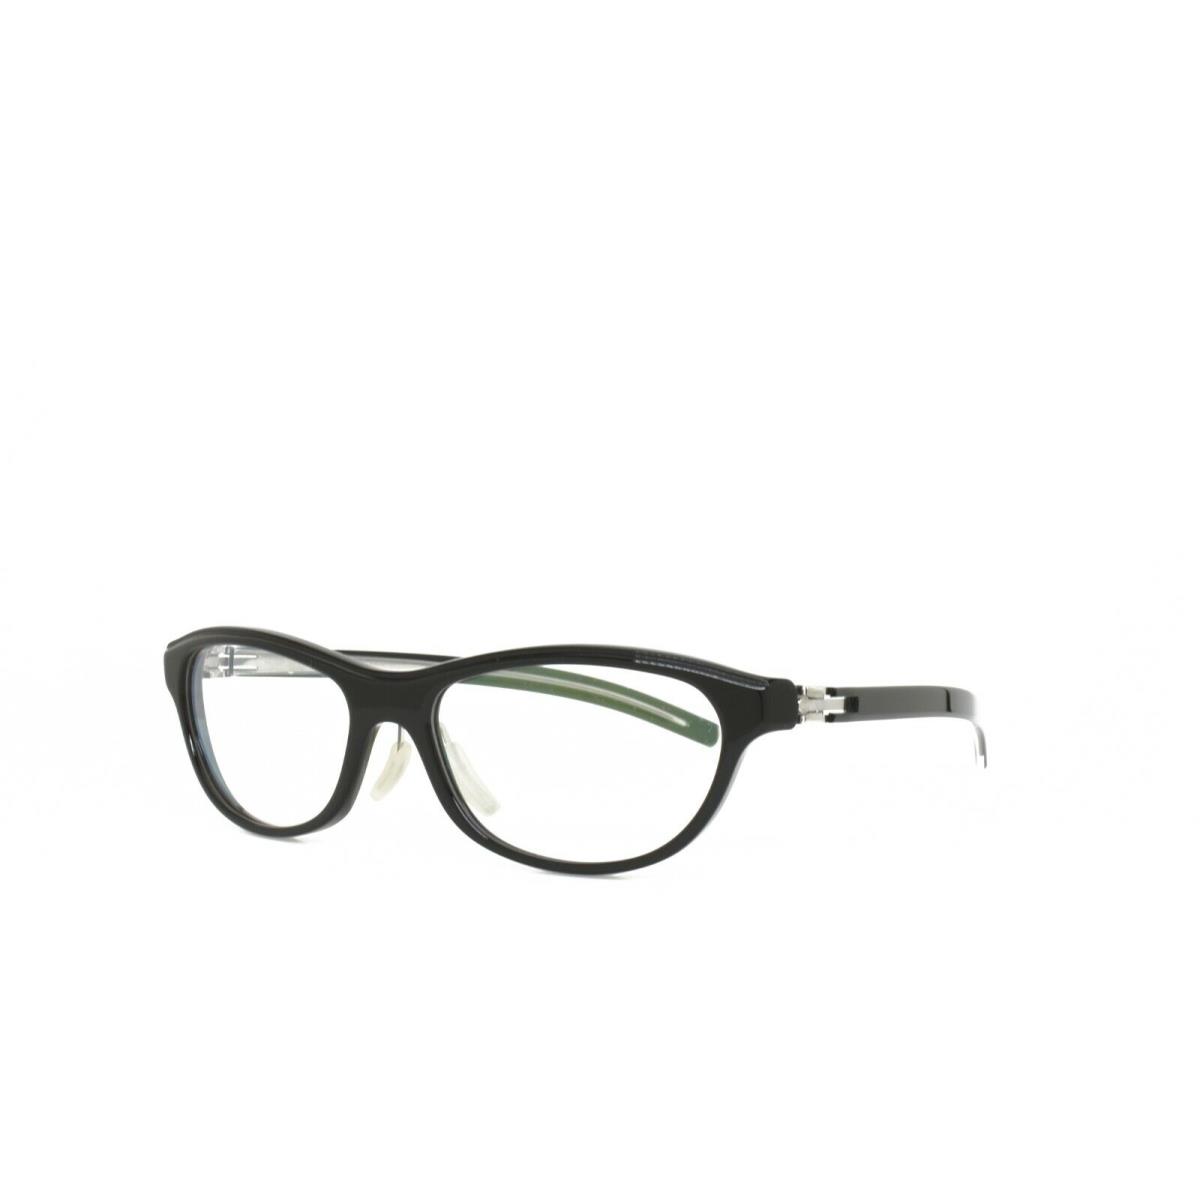 iC Berlin Eyeglasses Cosmic Ray Chrome Obsidian 52-18-145 Asian Fit